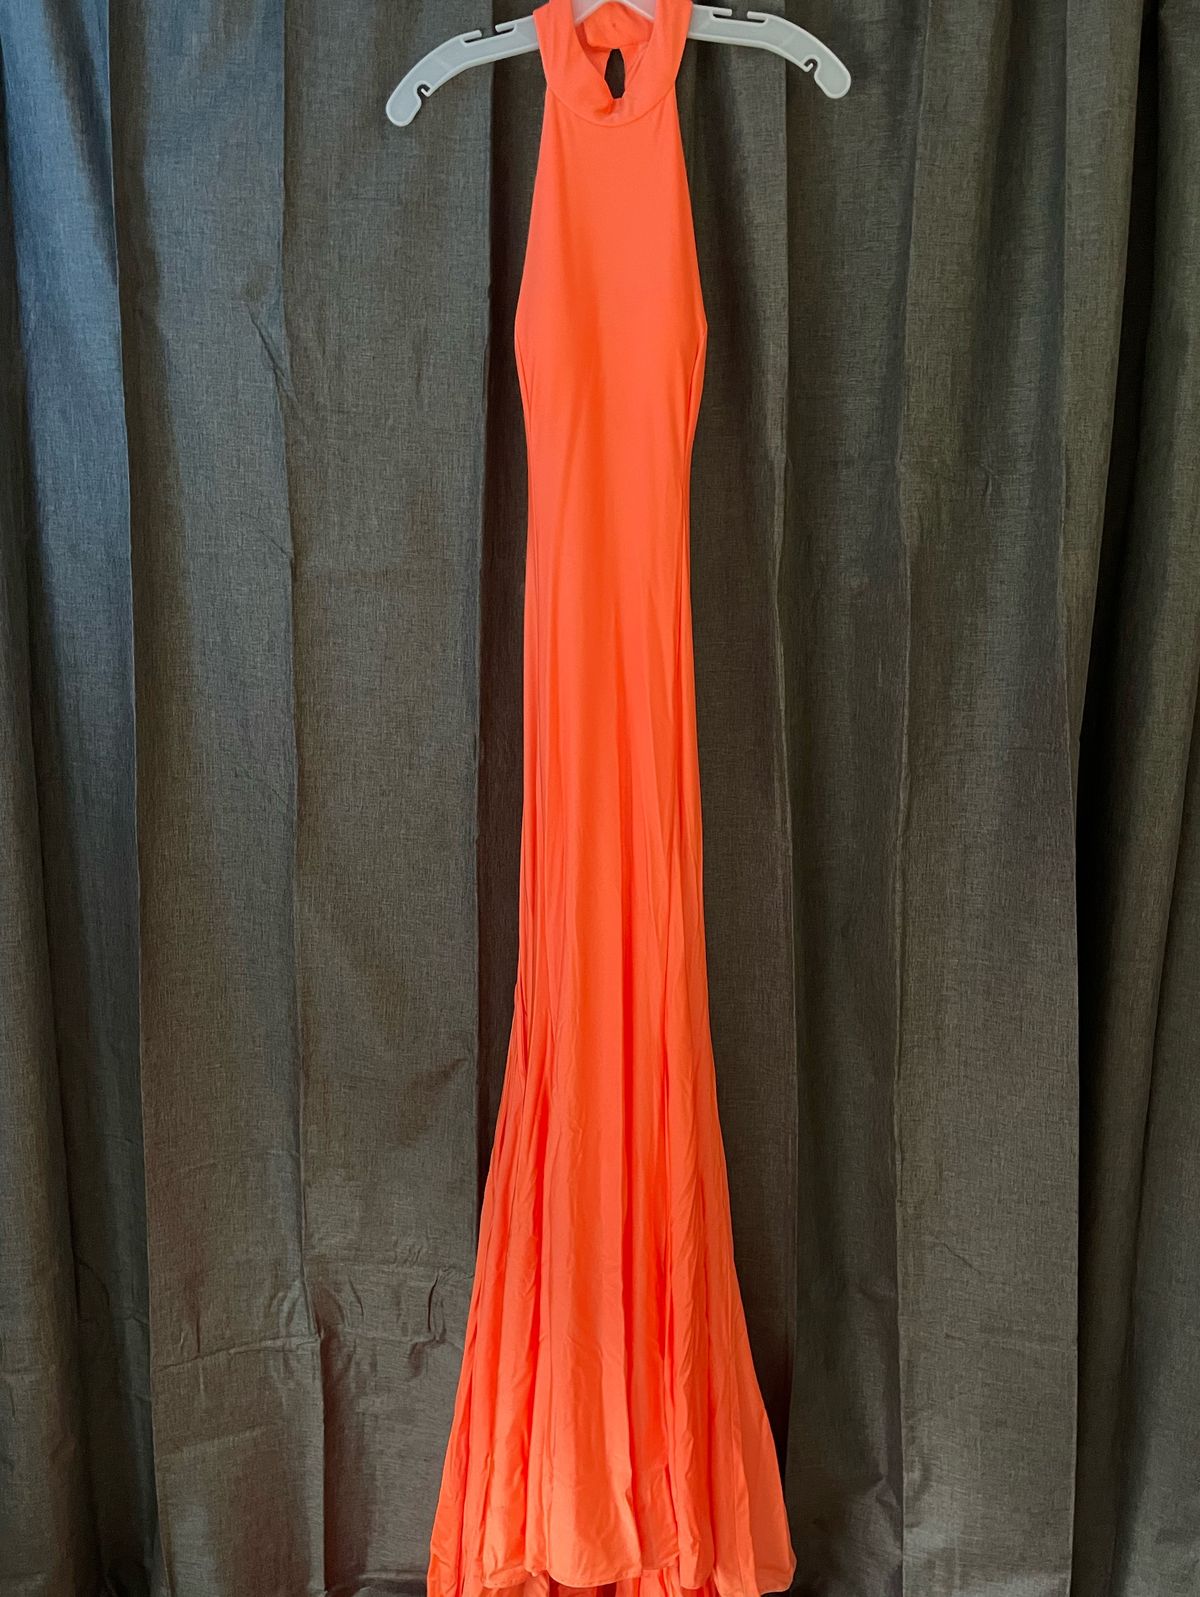 Sherri Hill Size 4 Prom Orange Mermaid Dress on Queenly